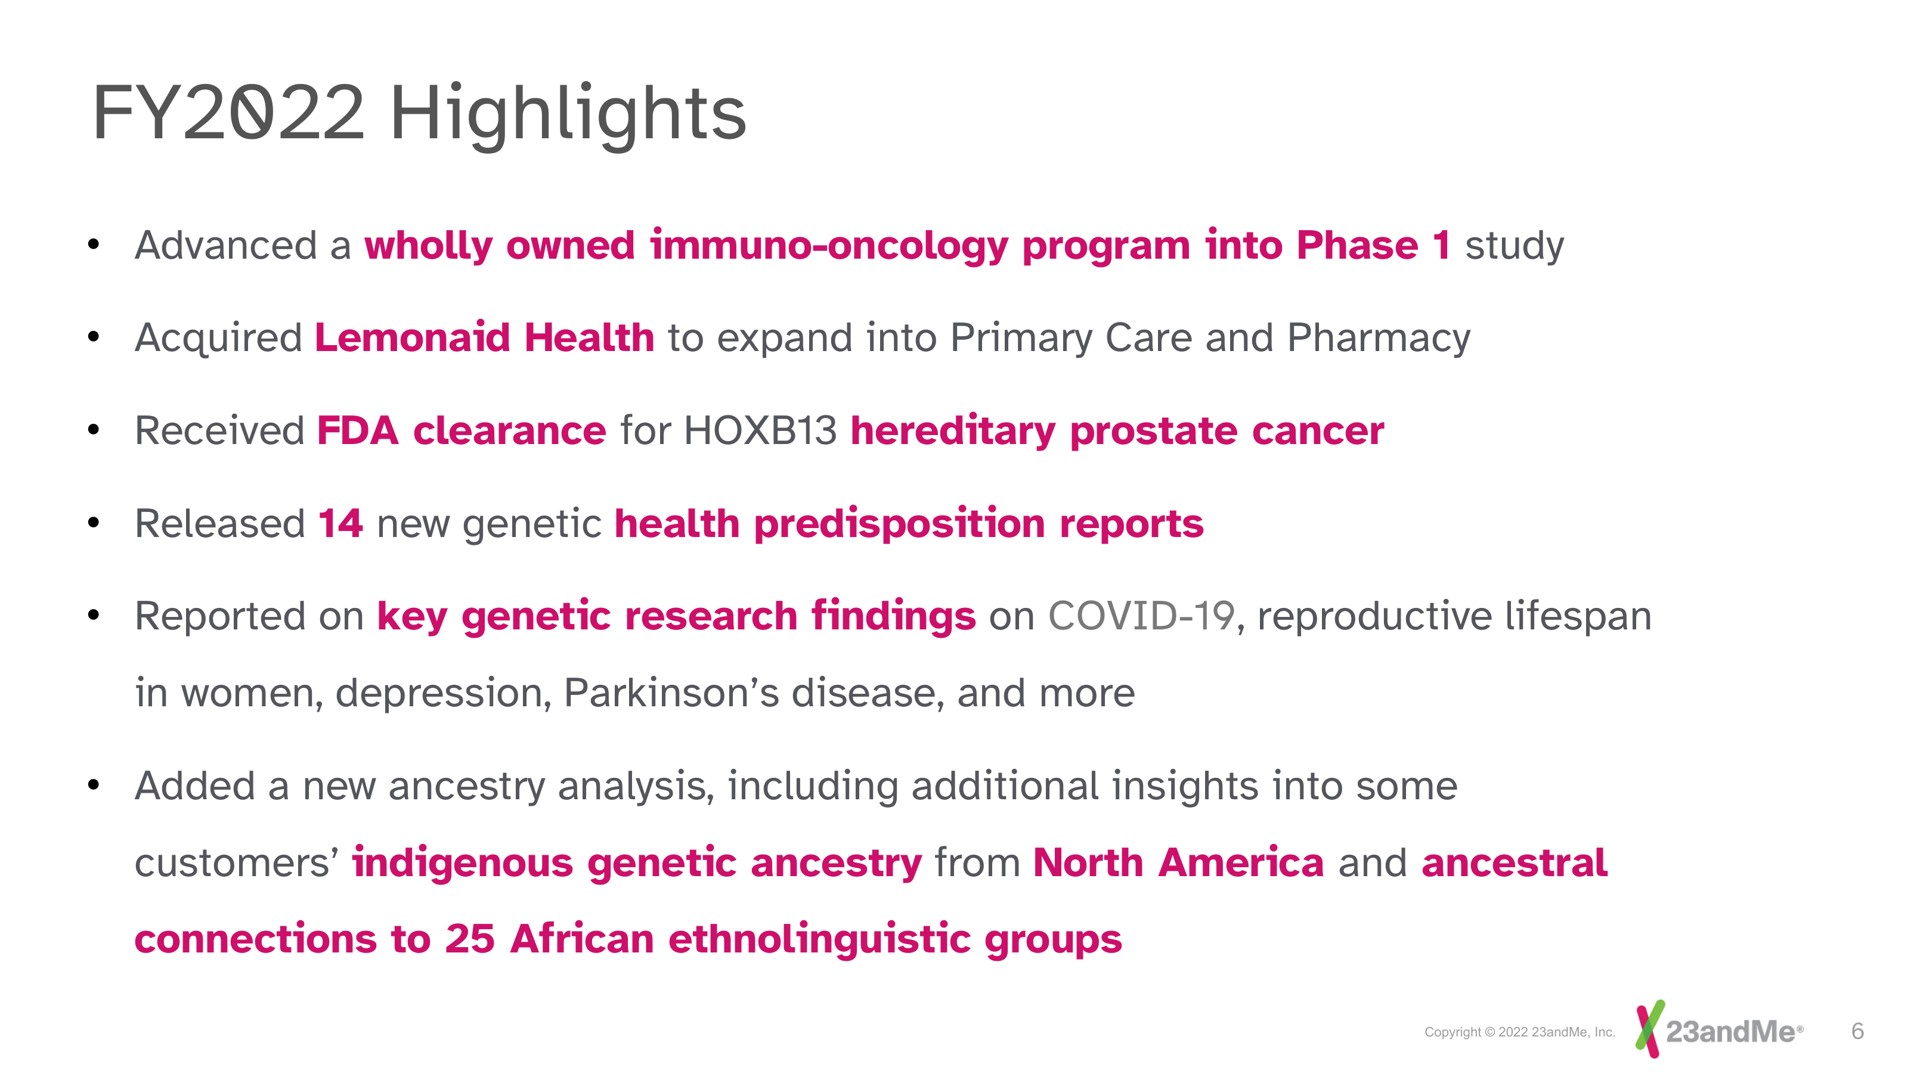 highlights | 23andMe